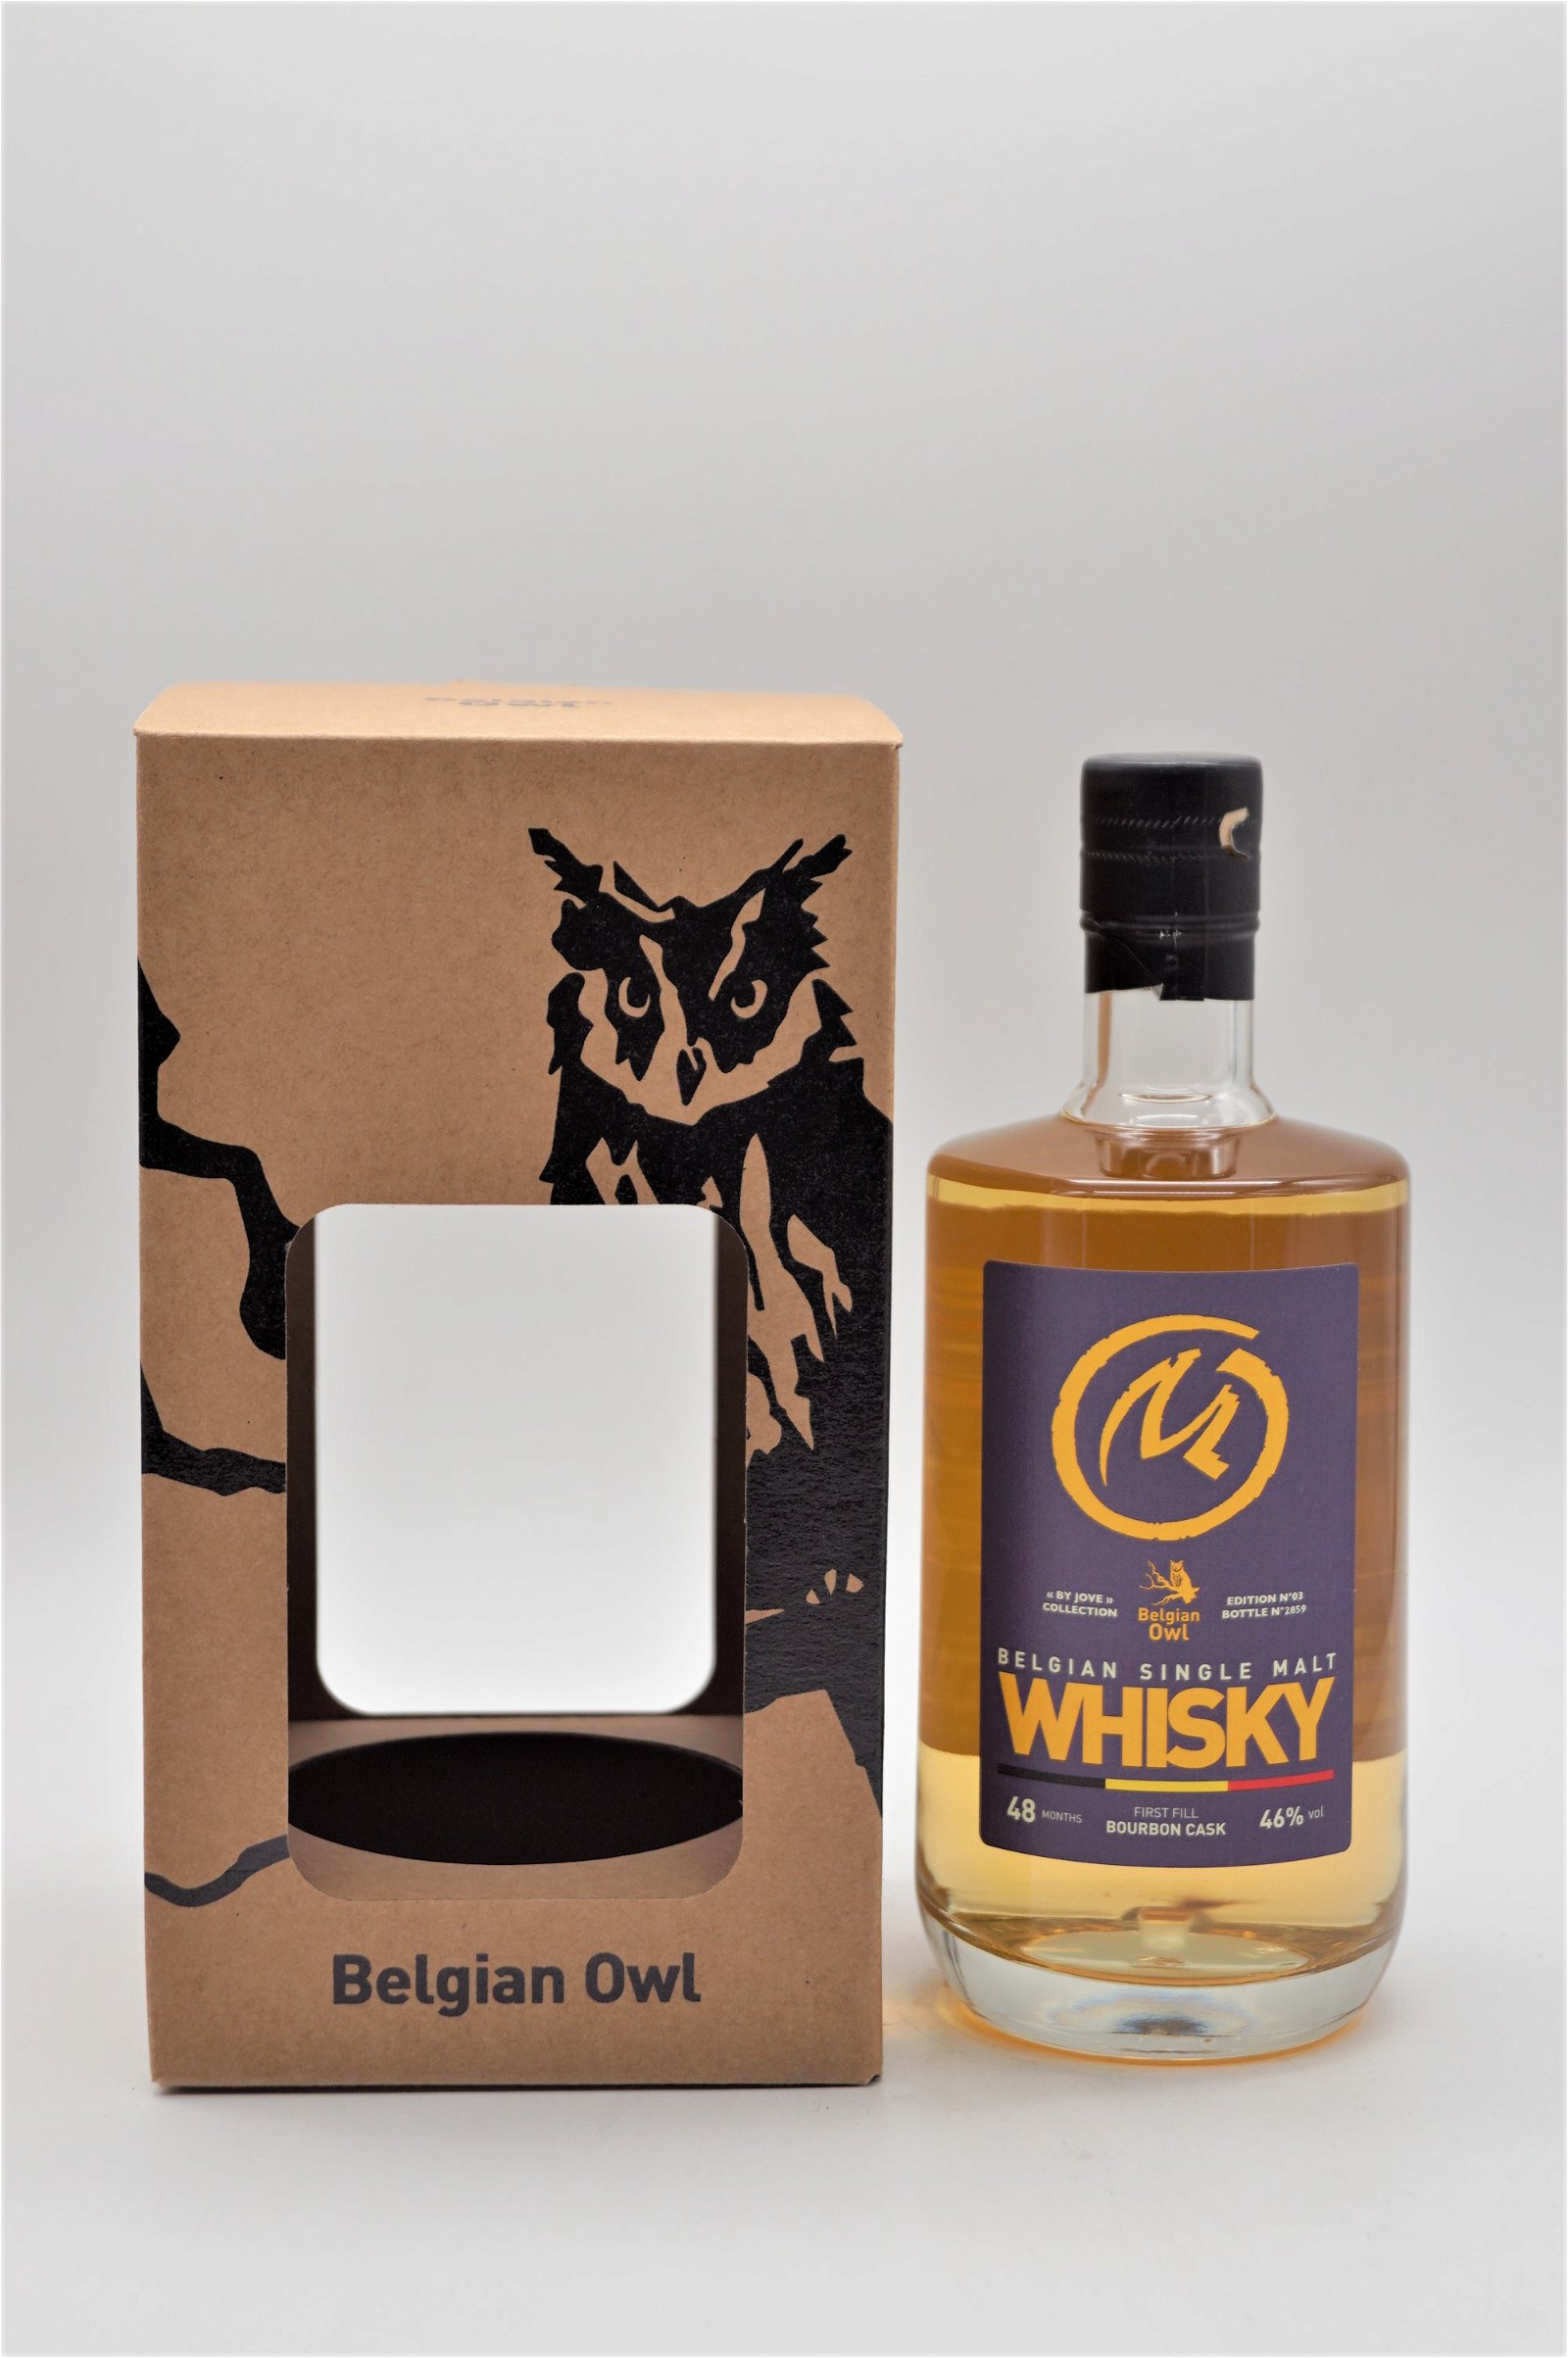 Belgian Owl Belgian Single Malt Whisky by Jove Edition No 3